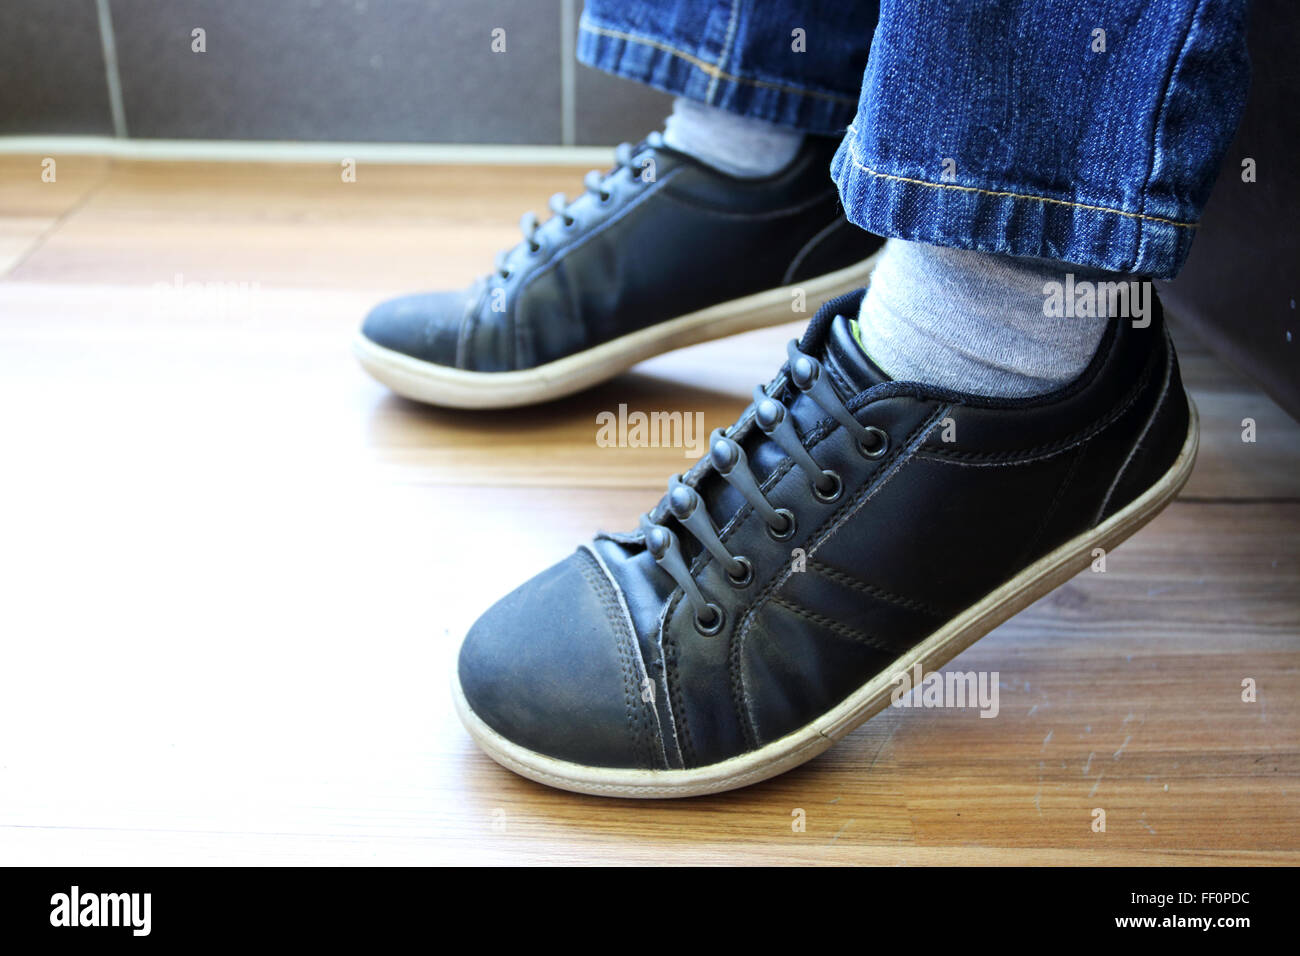 Zapatos negros para mujer fotografías e imágenes de alta resolución - Alamy